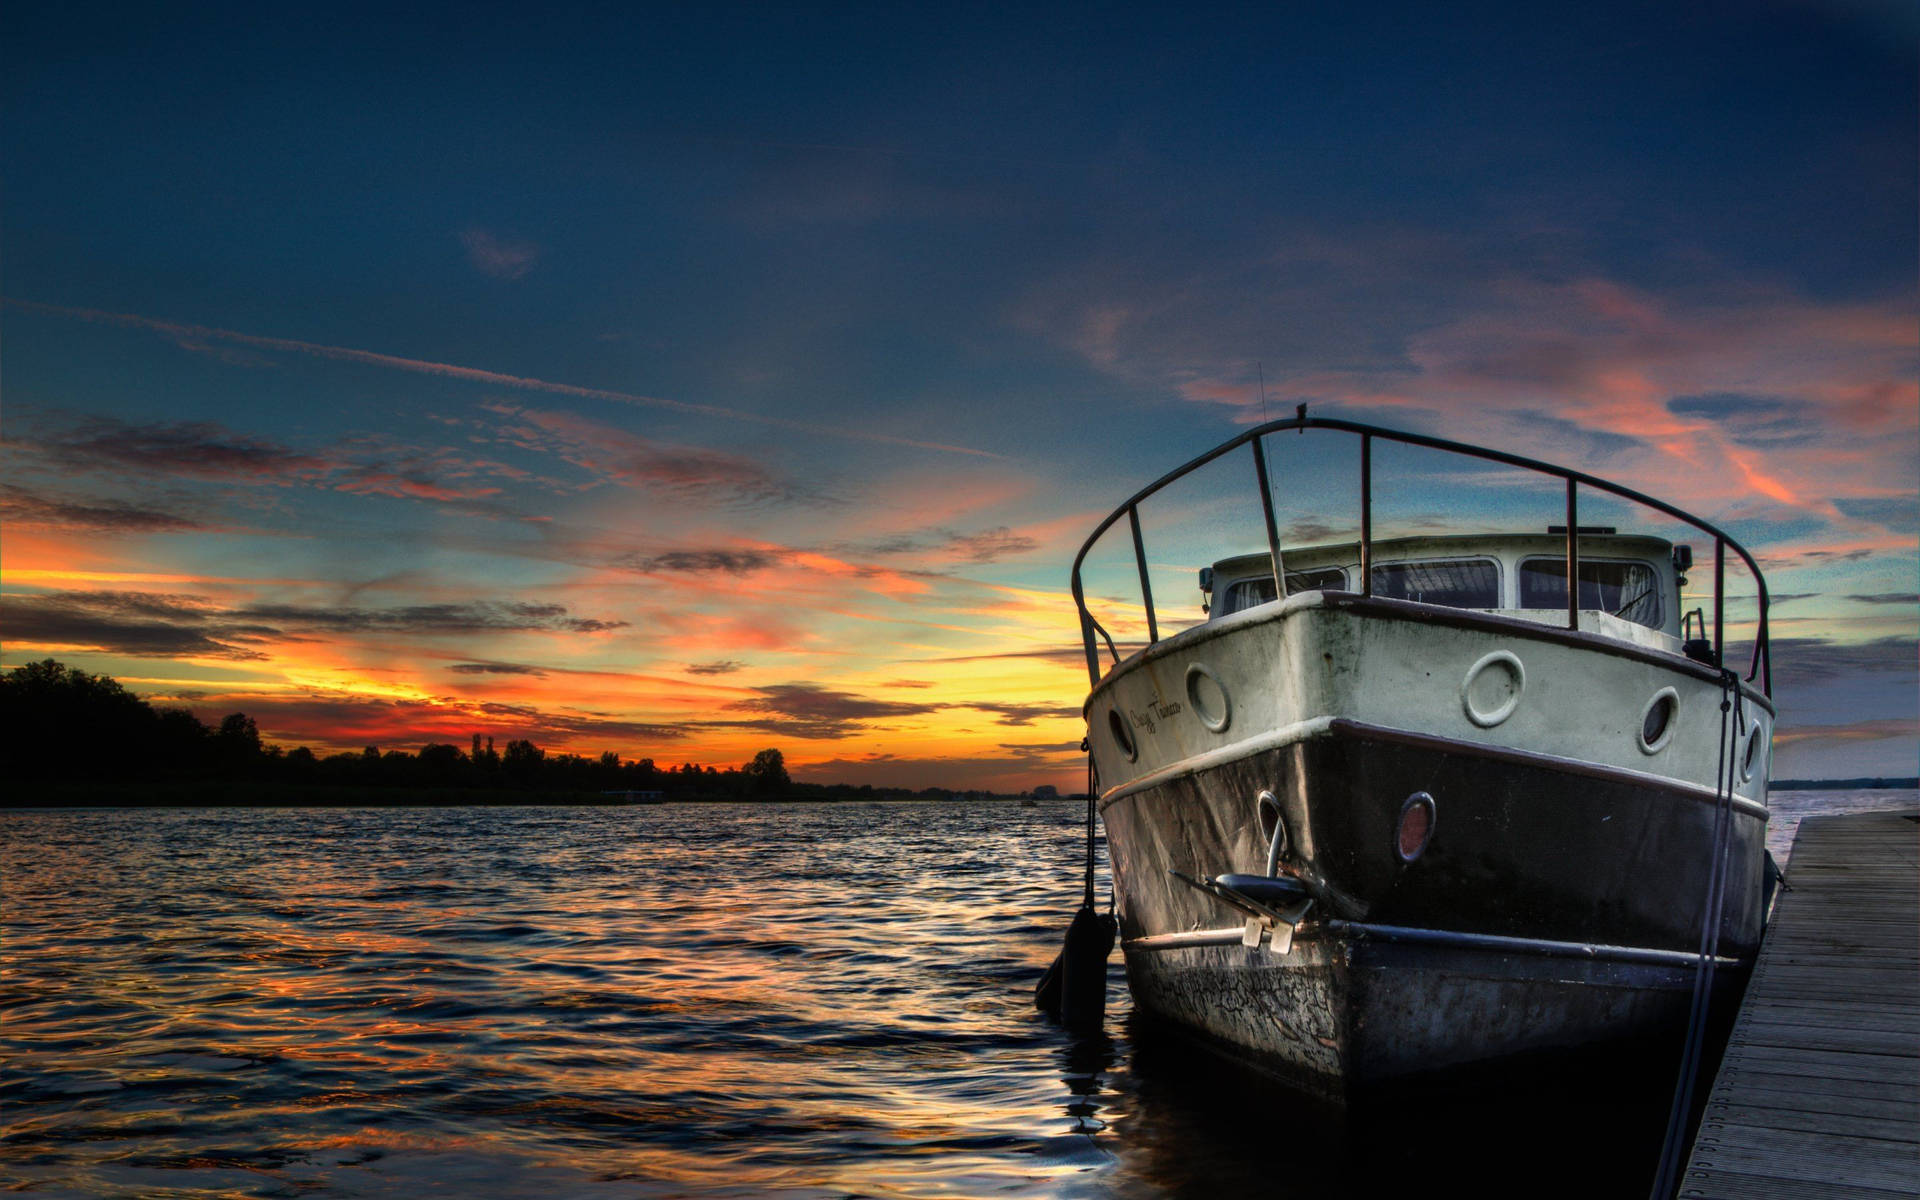 550 Boat Pictures  Download Free Images on Unsplash